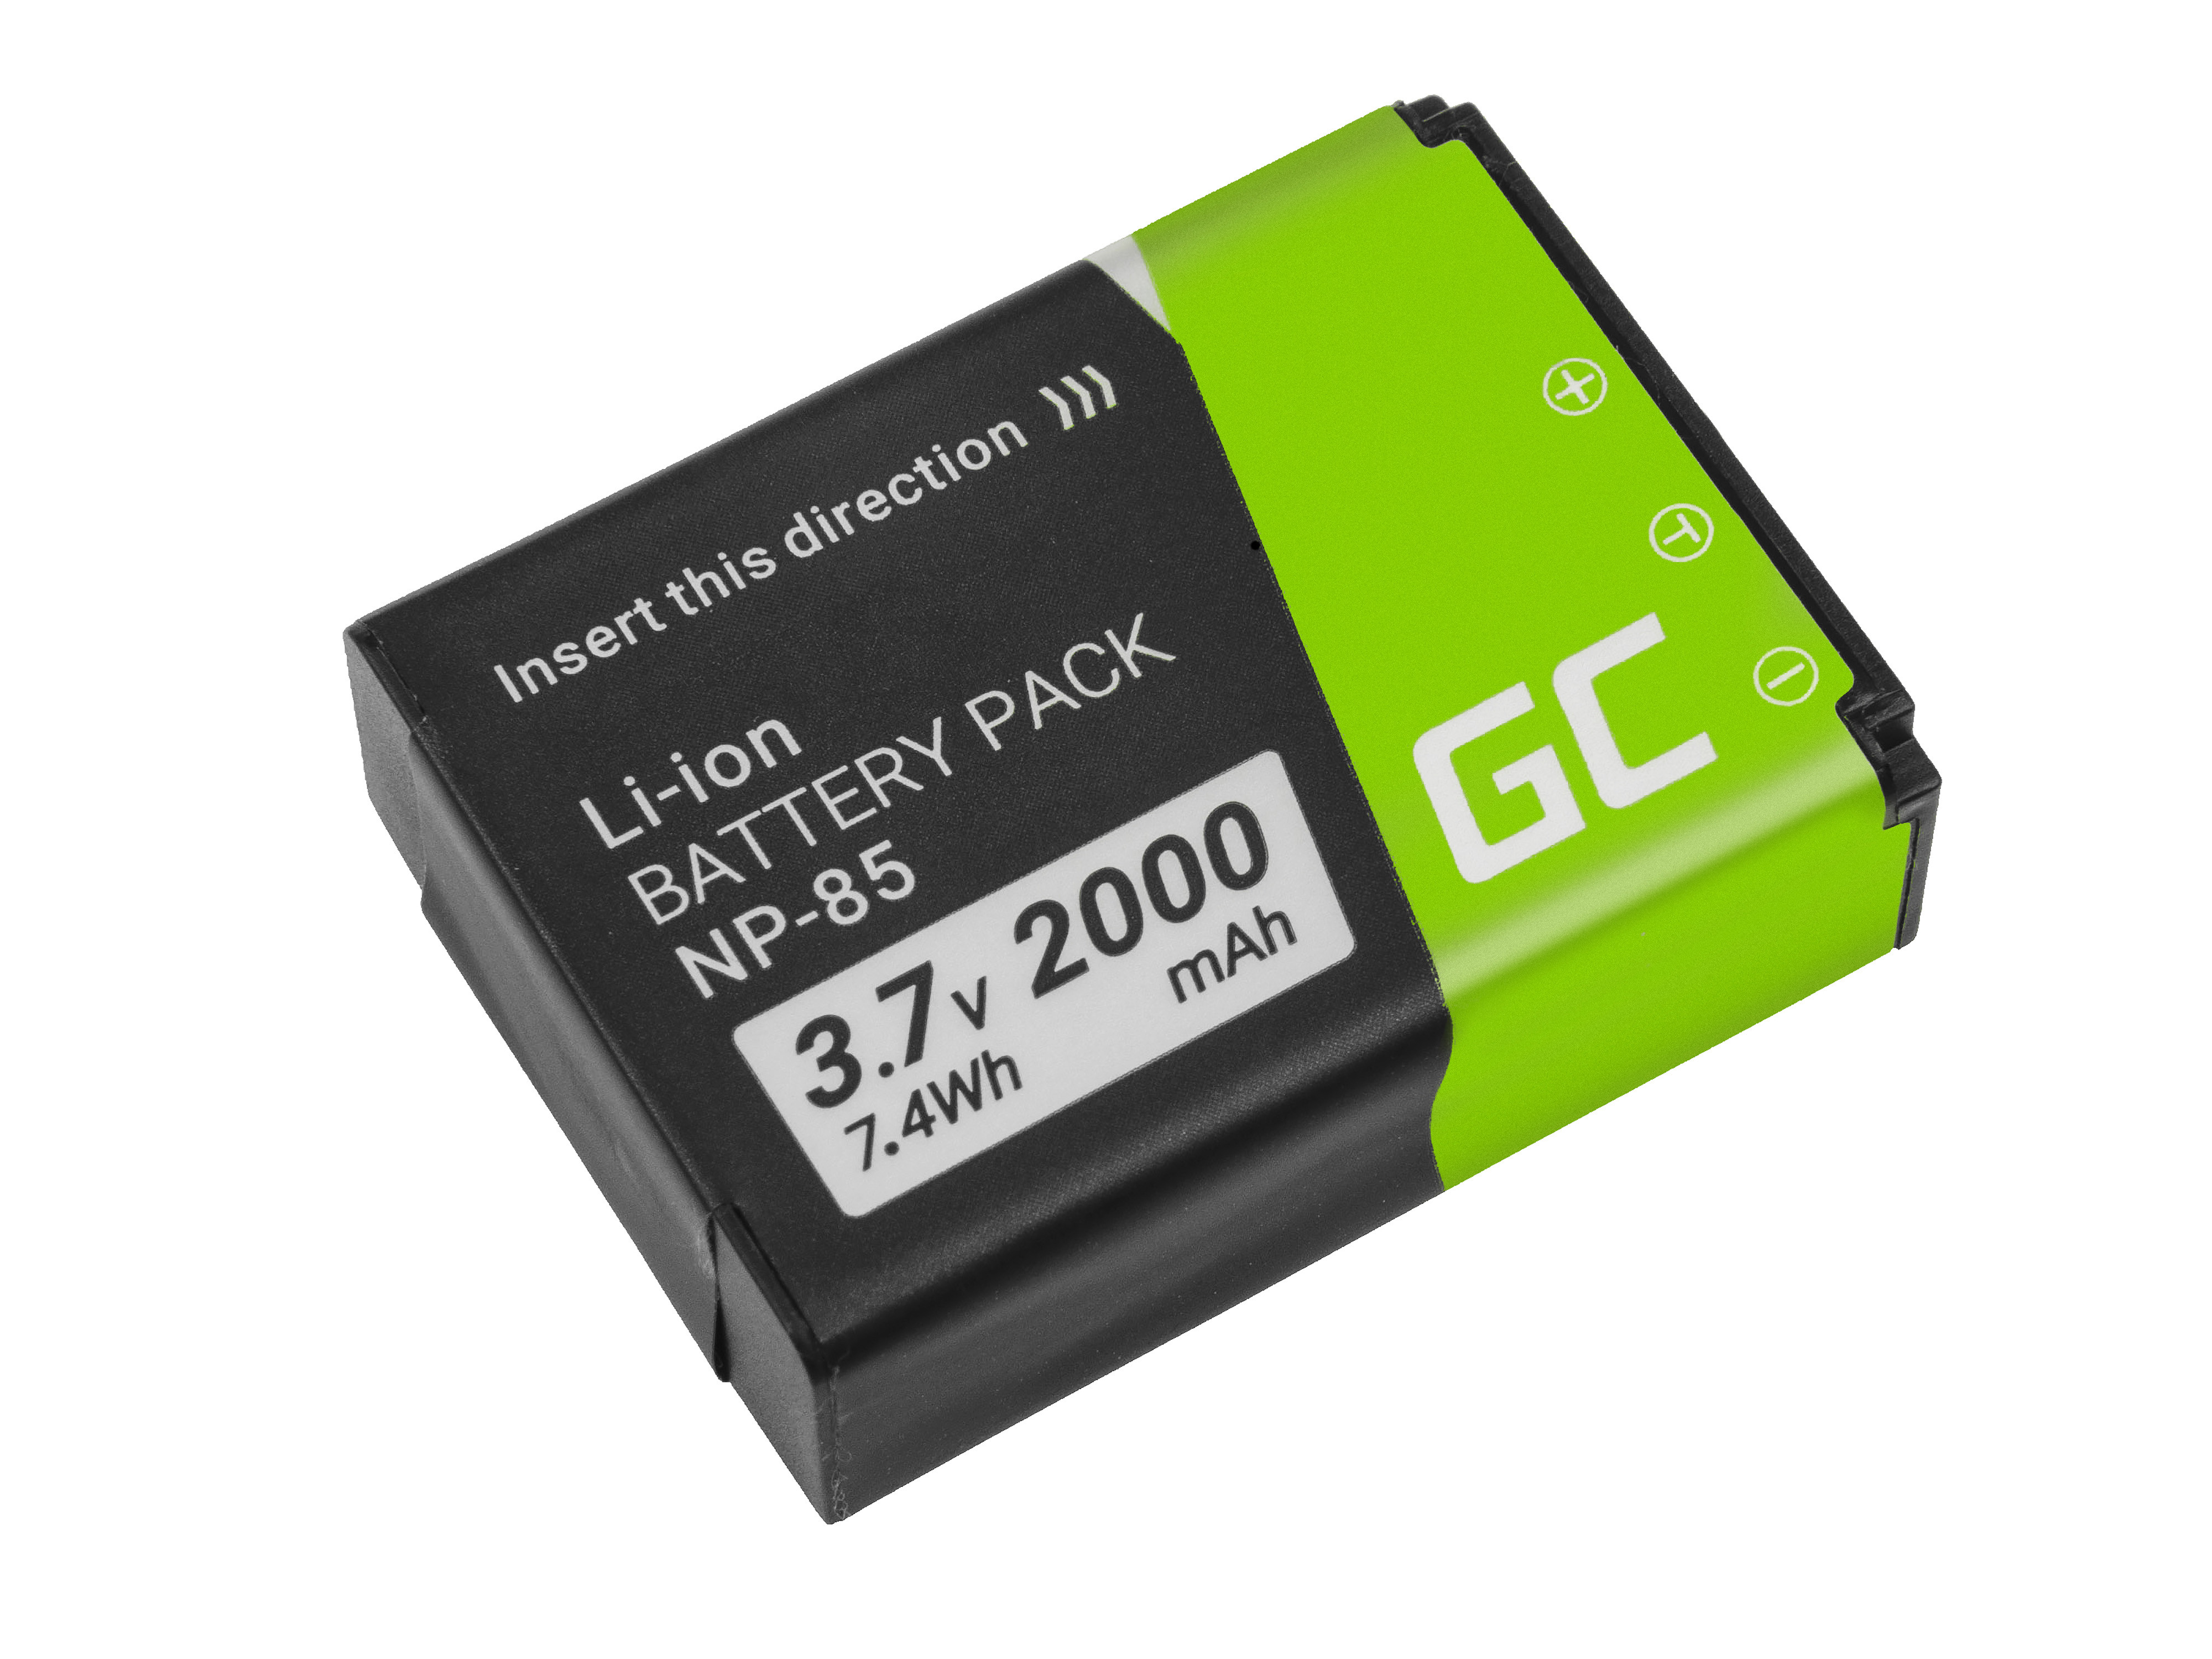 EOL-Green Cell Camera Battery NP-85 NP85 for FujiFilm FinePix SL300, SL305, SL280, SL260, SL240 3.7V 1640mAh